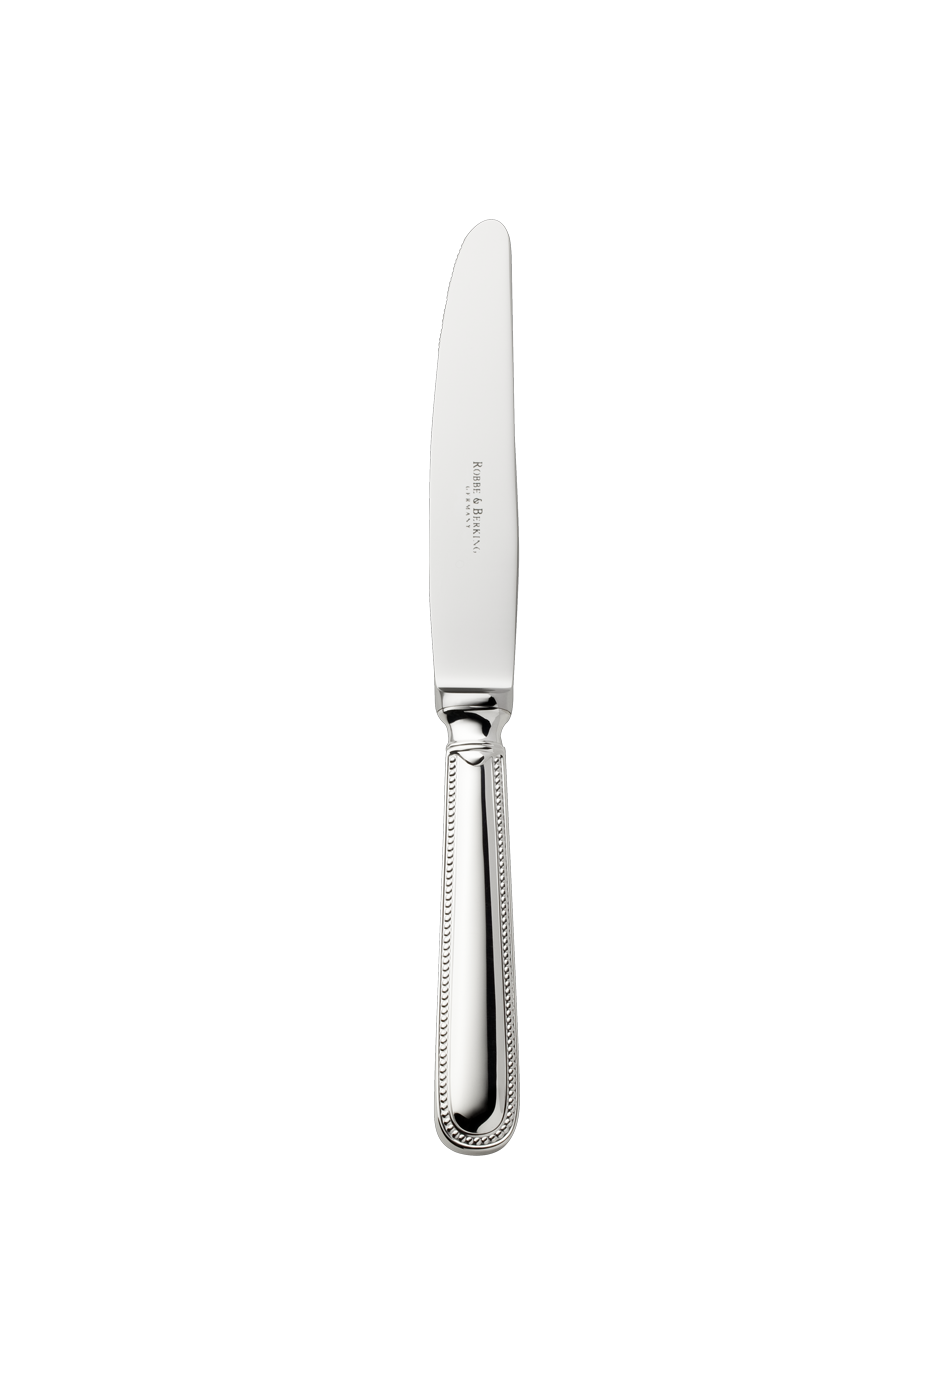 Franz. Perl Dessert Knife (150g massive silverplated)